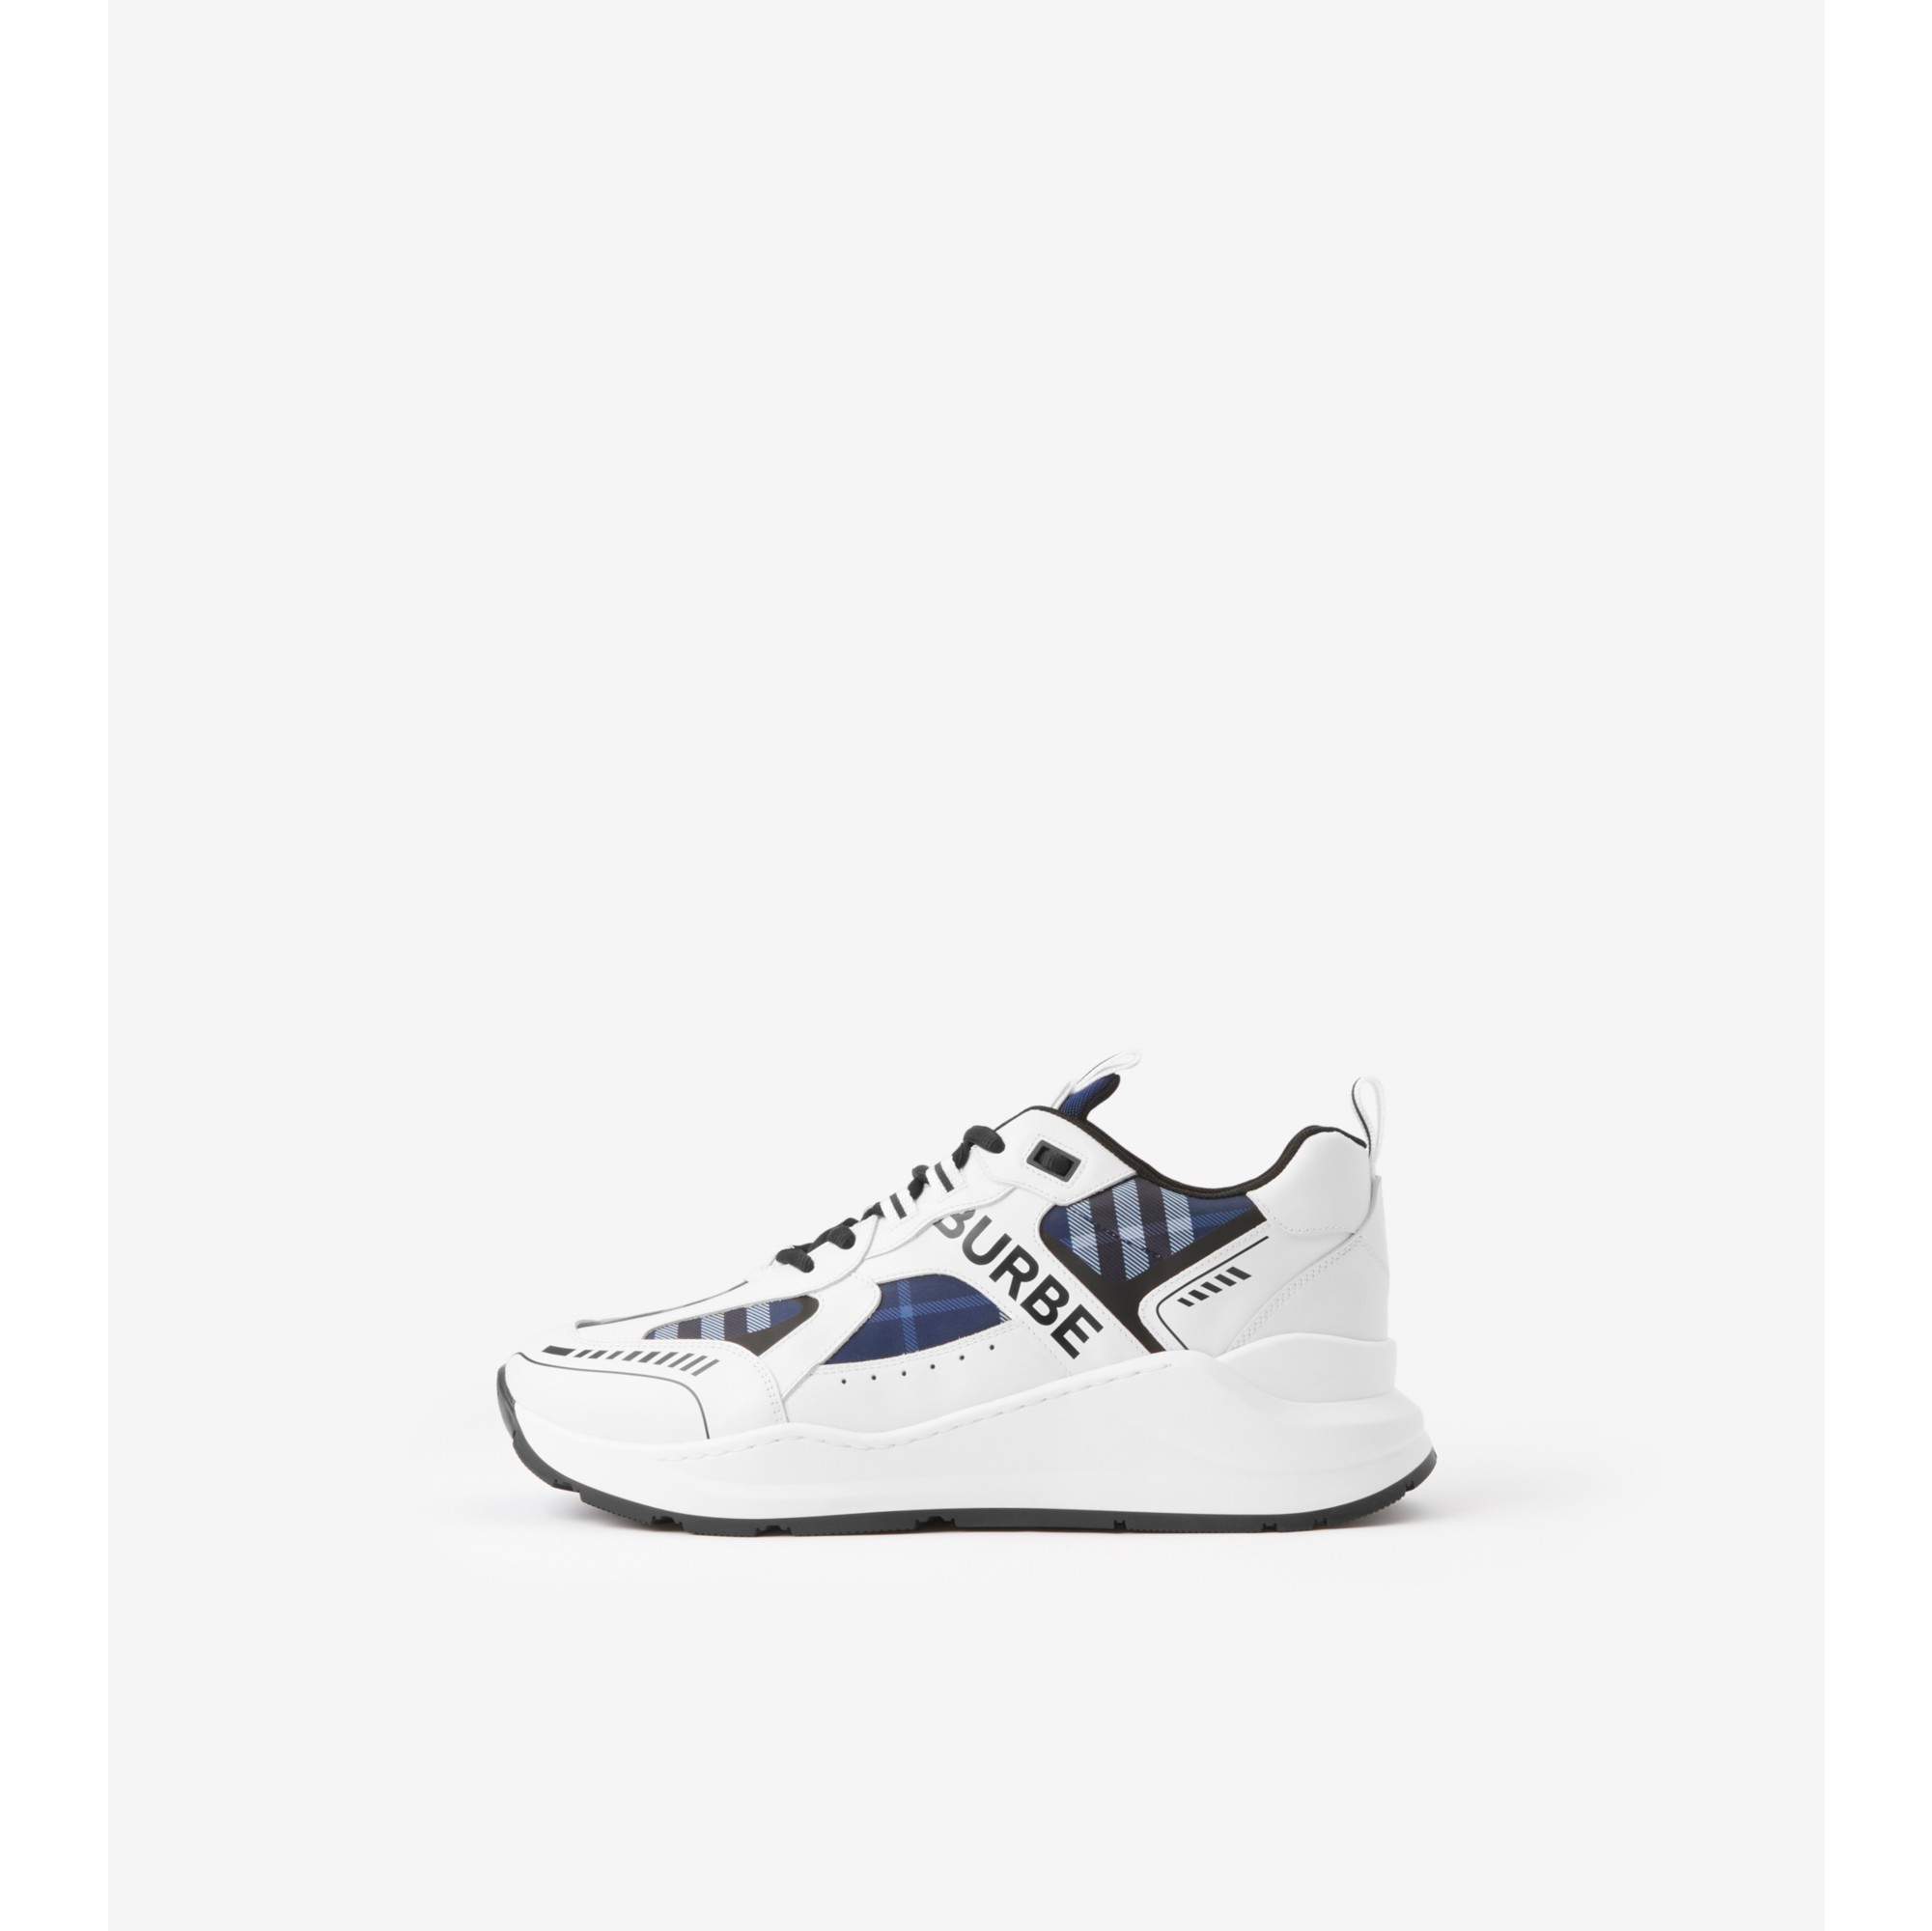 Burberry Monogram Canvas Sneaker In Blue